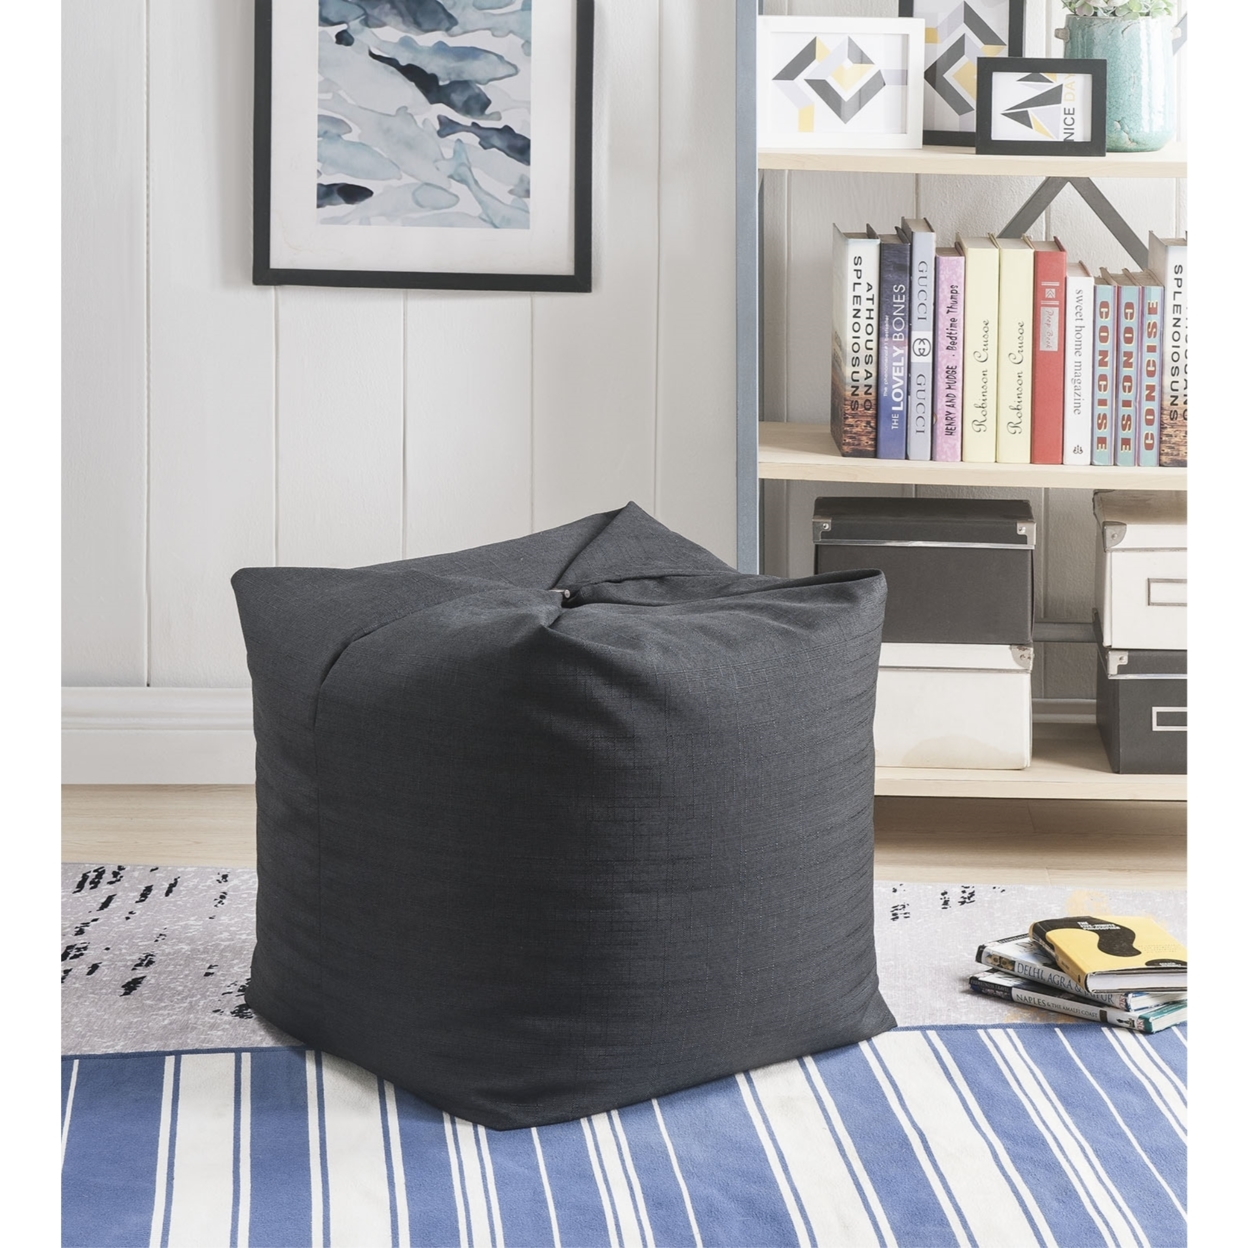 Loungie? Magic Pouf Beanbag-Linen Or Sherpa Fabric-3-in-1 Convertible Ottoman + Chair + Floor Pillow-Modern & Functional - Grey Linen